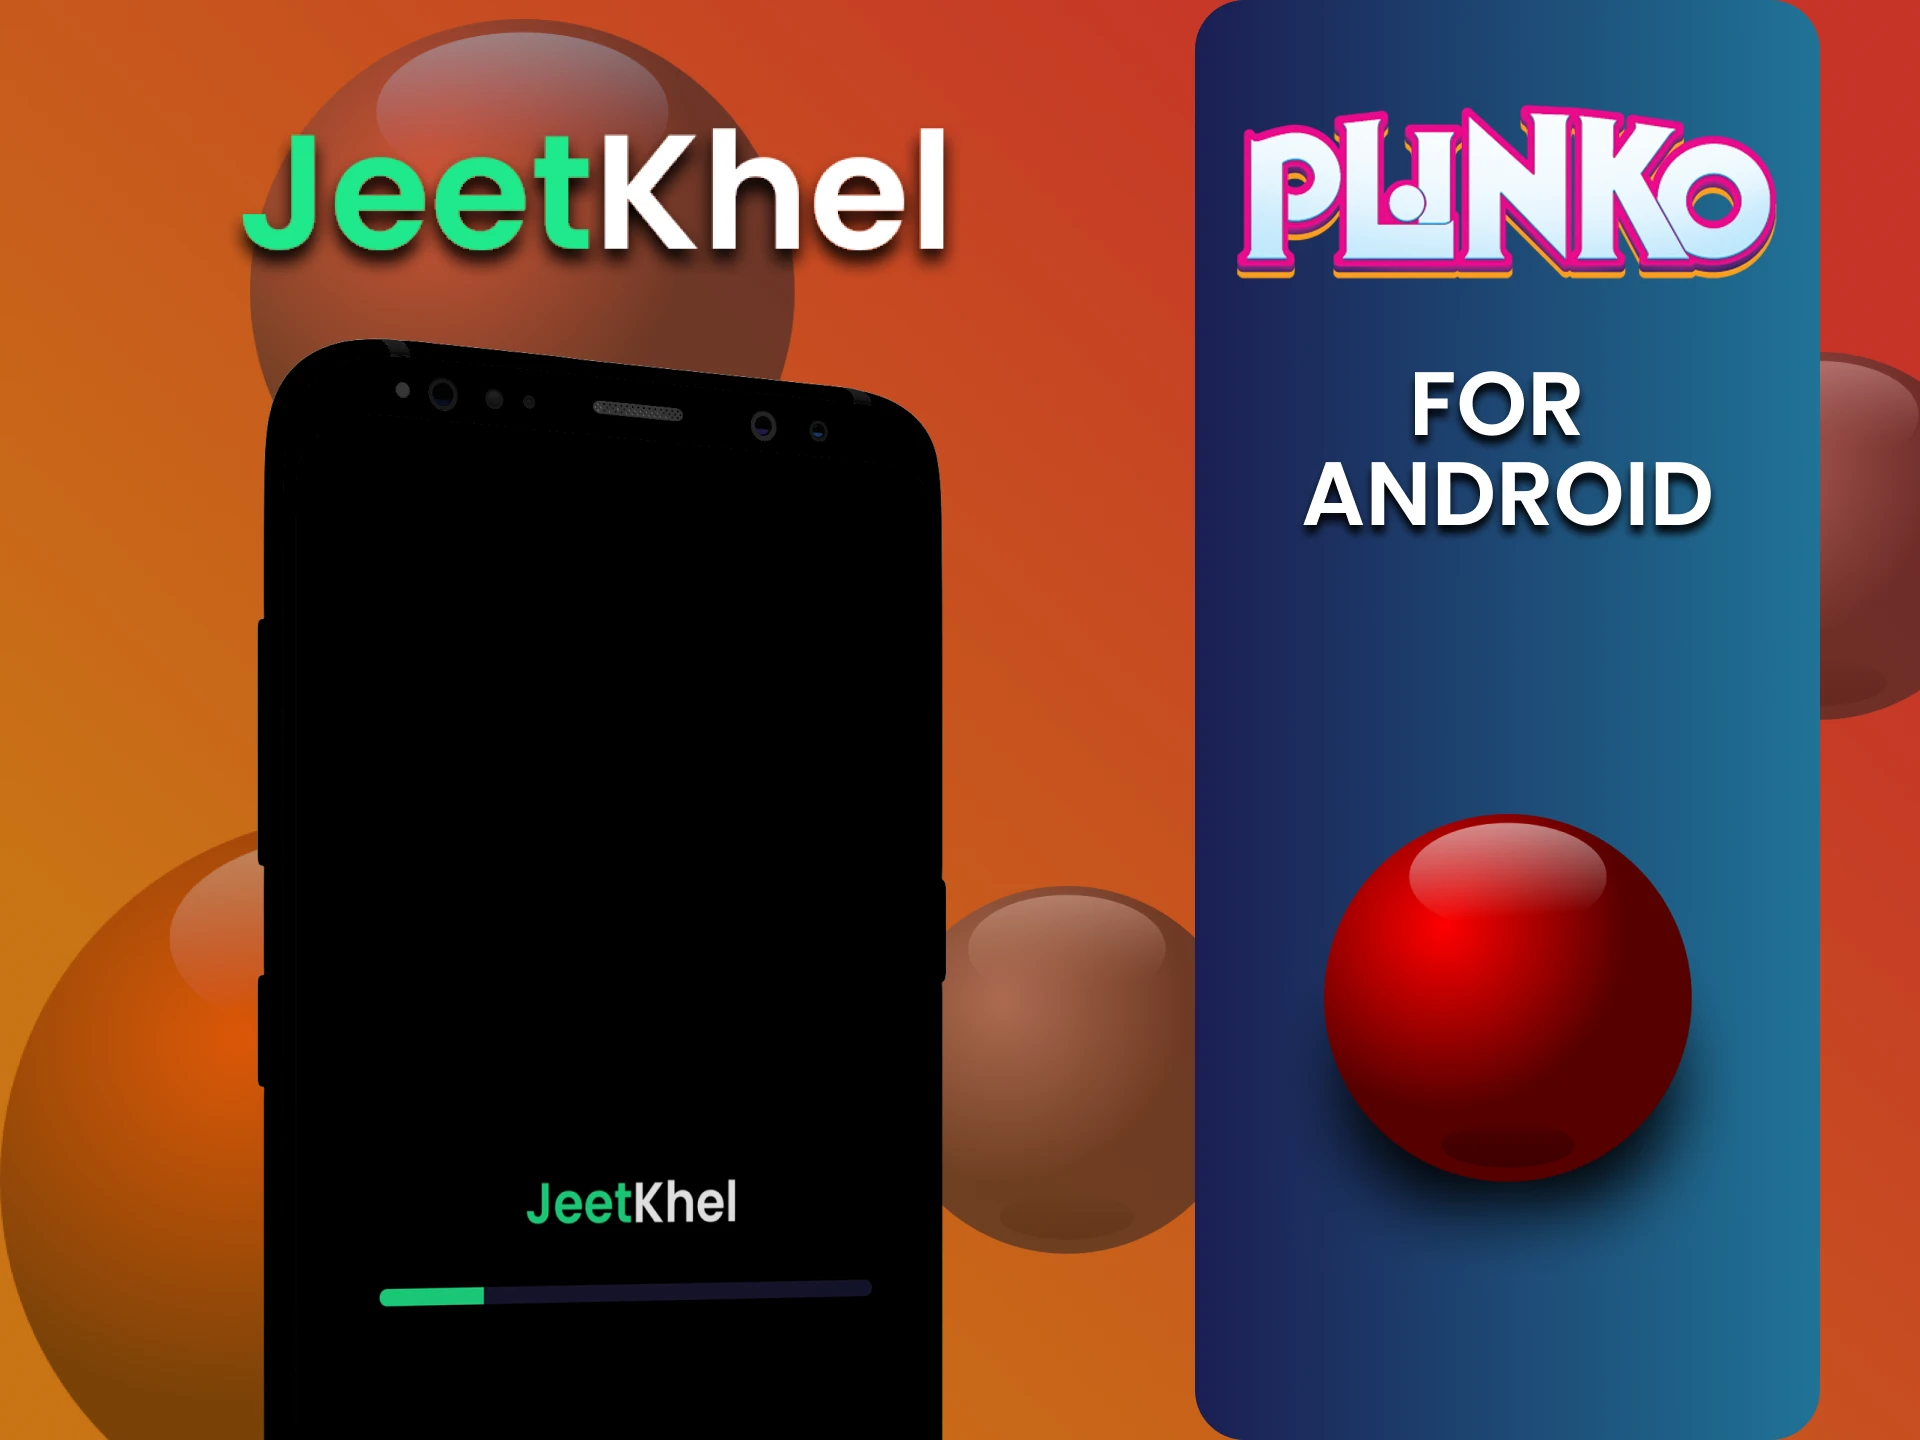 Download JeetKhel app to play Plinko on Android.